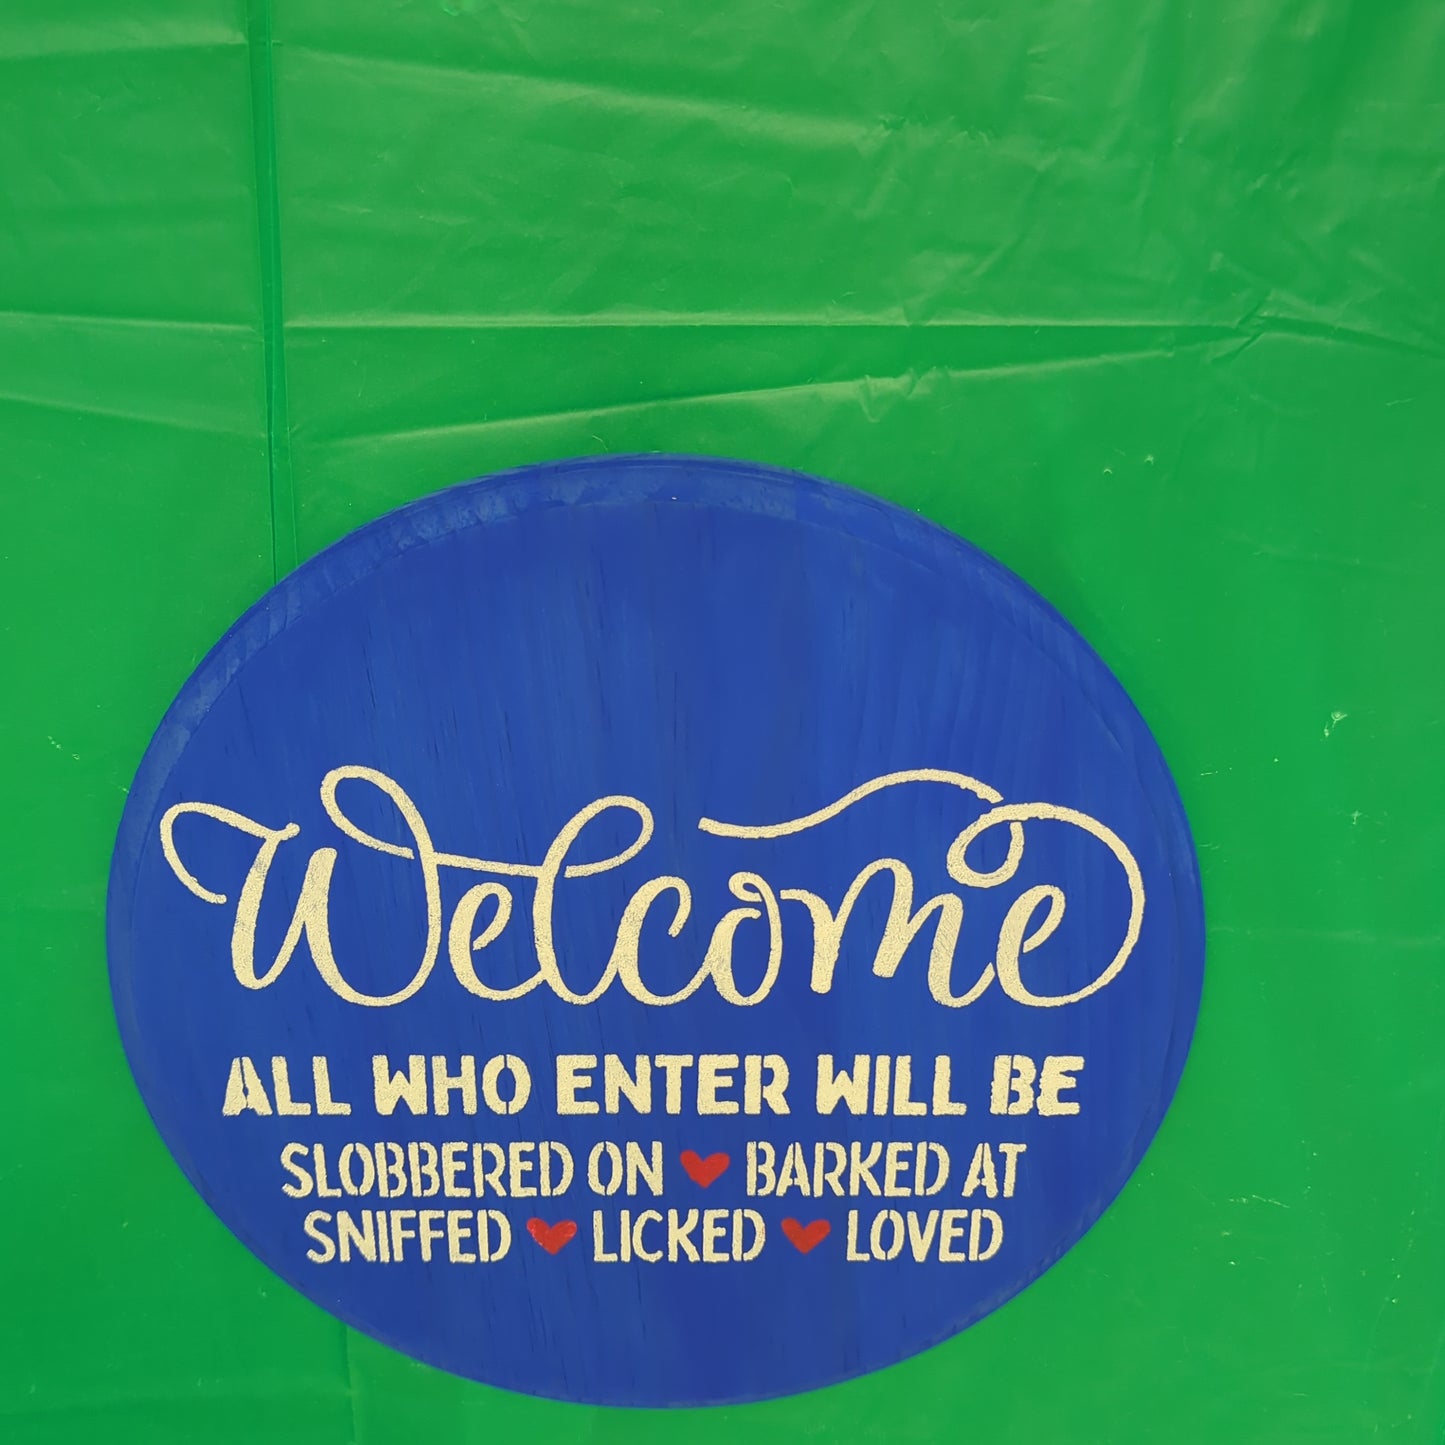 All who enter